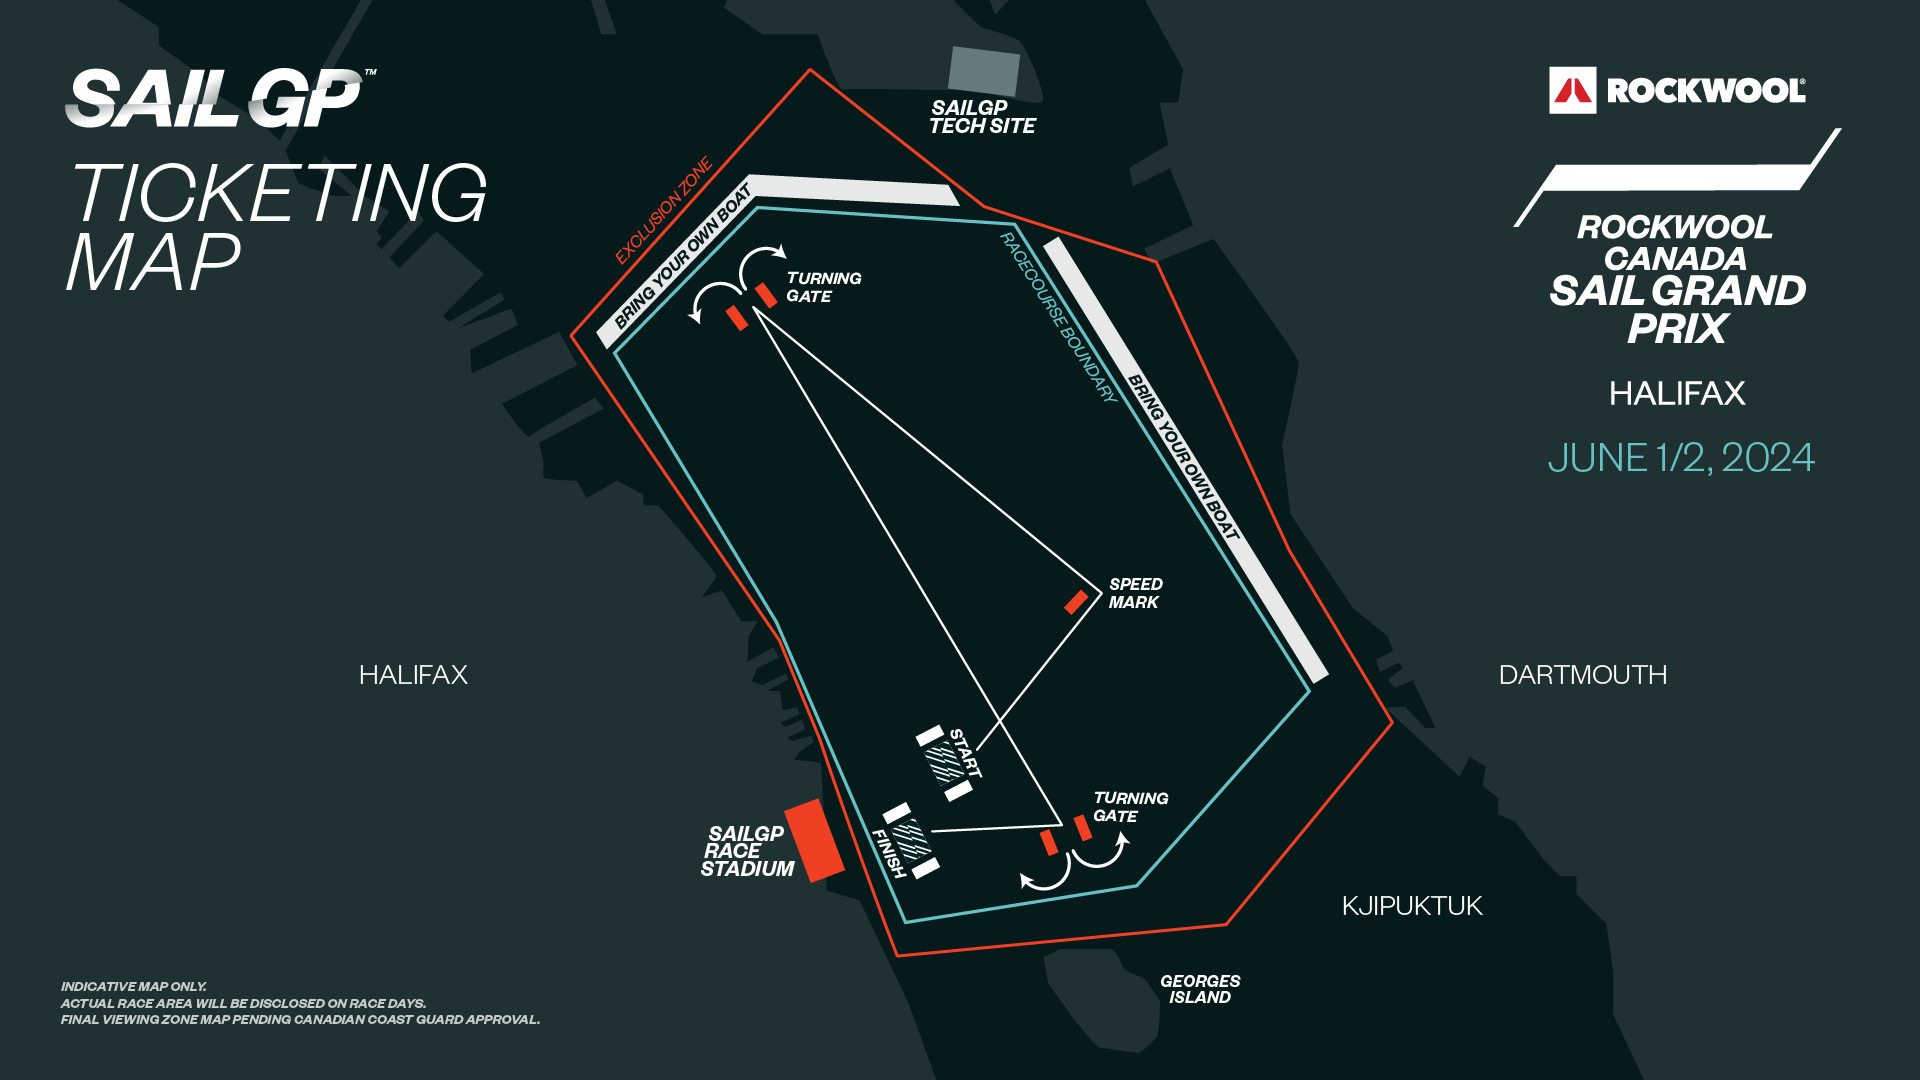 ROCKWOOL Canada Sail Grand Prix | Halifax | Season 4 | Ticketing Map